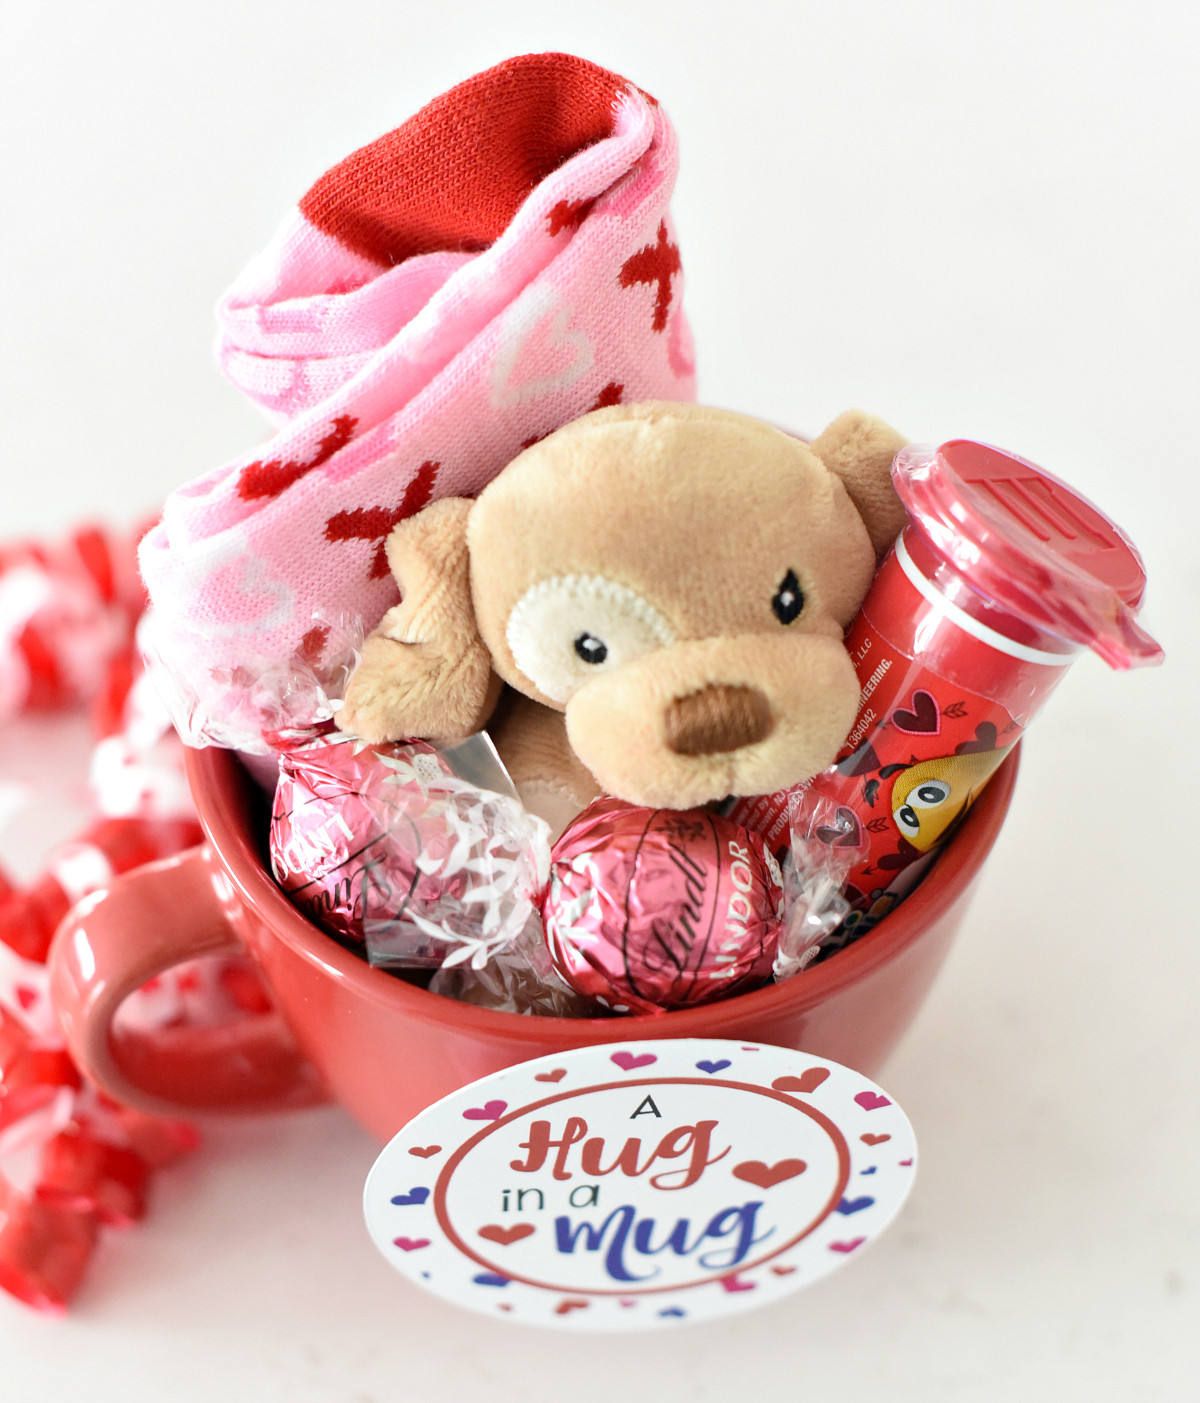 Children Valentine Gift Ideas
 Fun Valentines Gift Idea for Kids – Fun Squared